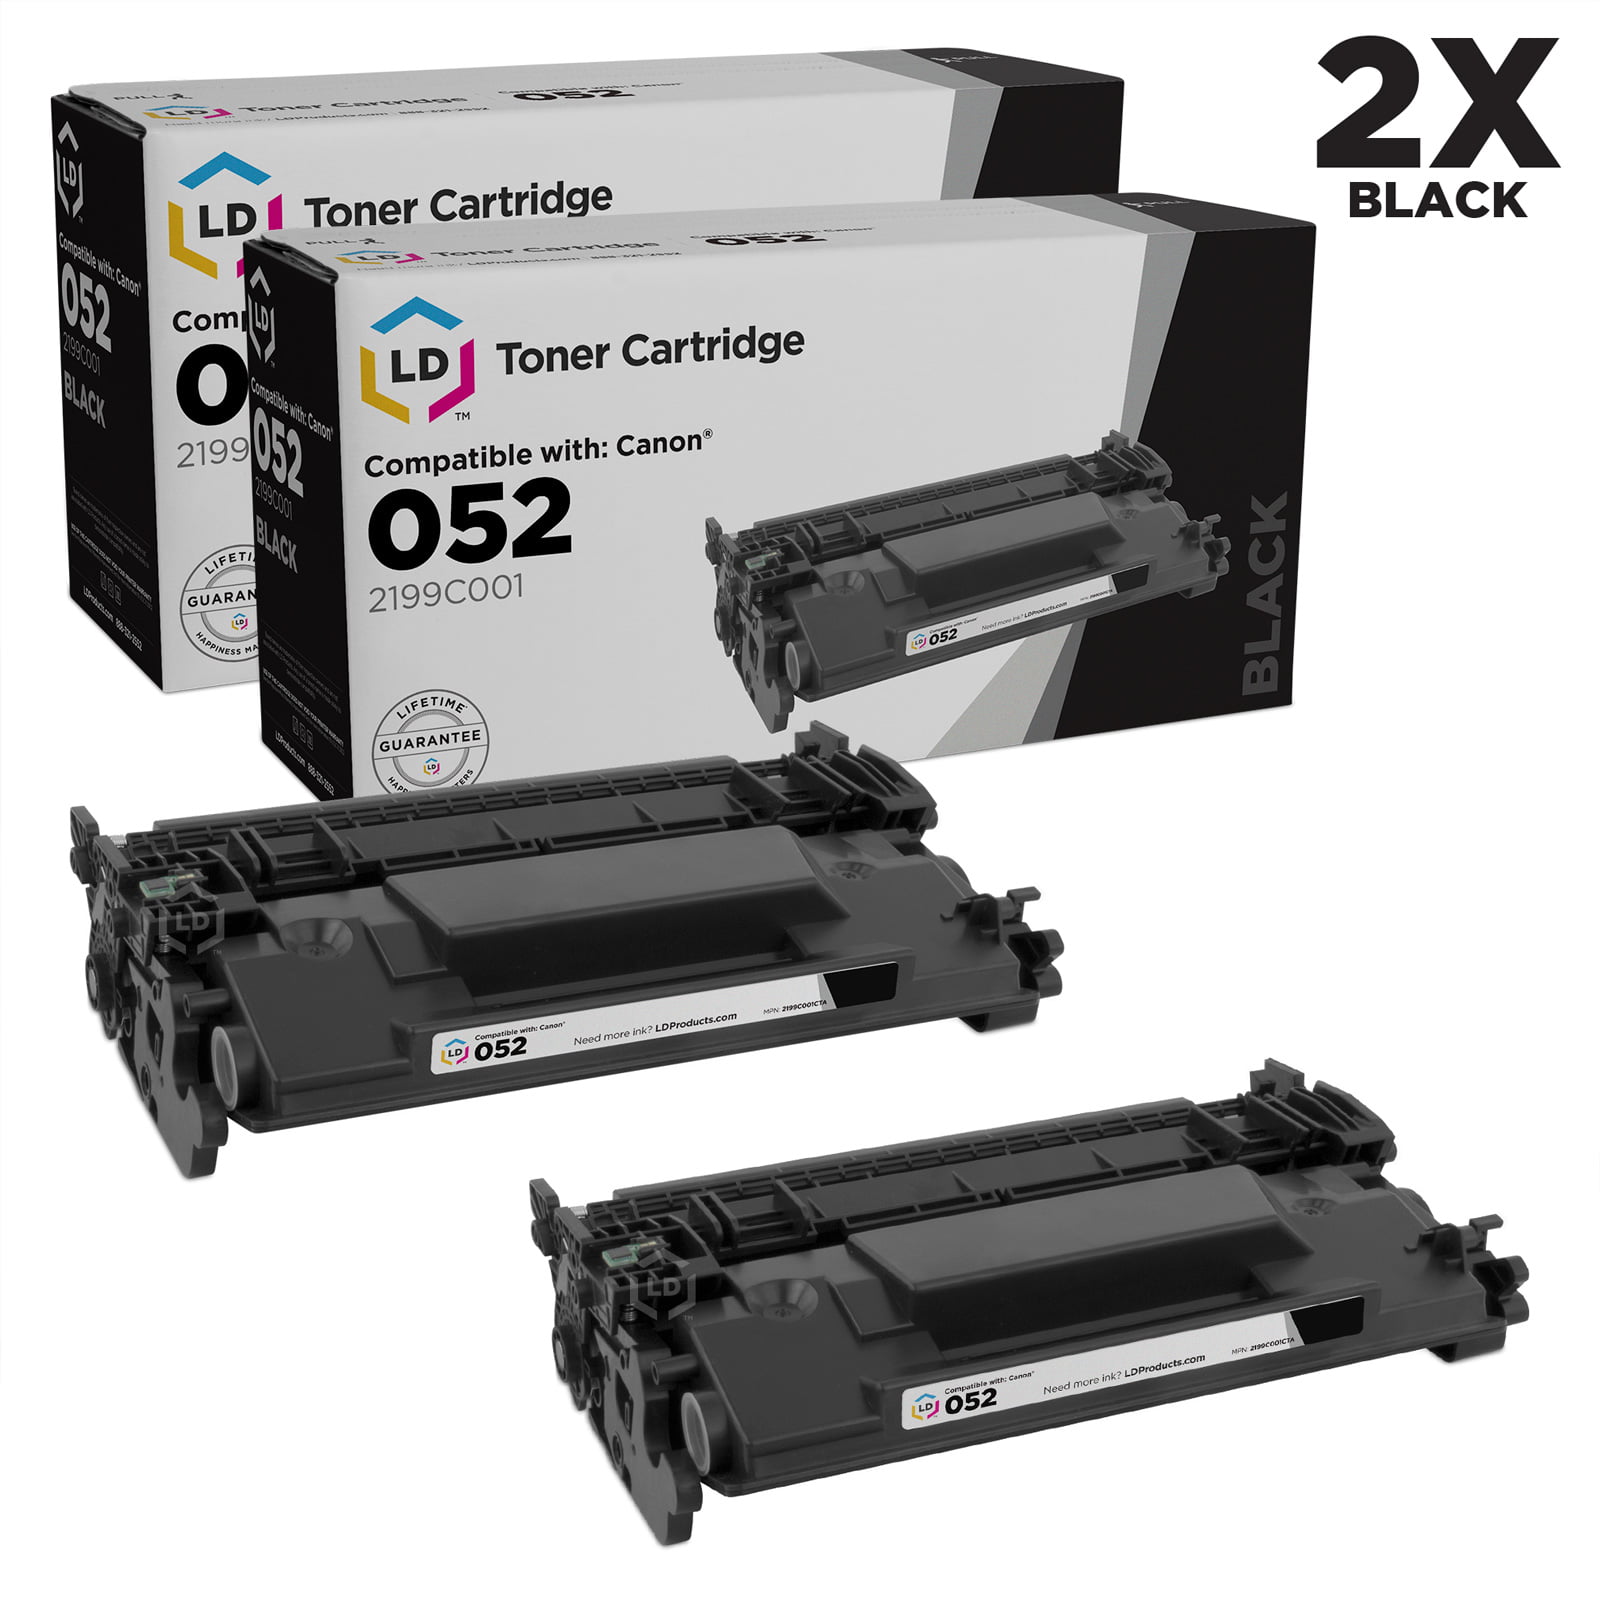 2 pack 052 Toner Cartridge fits Canon imageCLASS MF426dw MF424dw Printer 